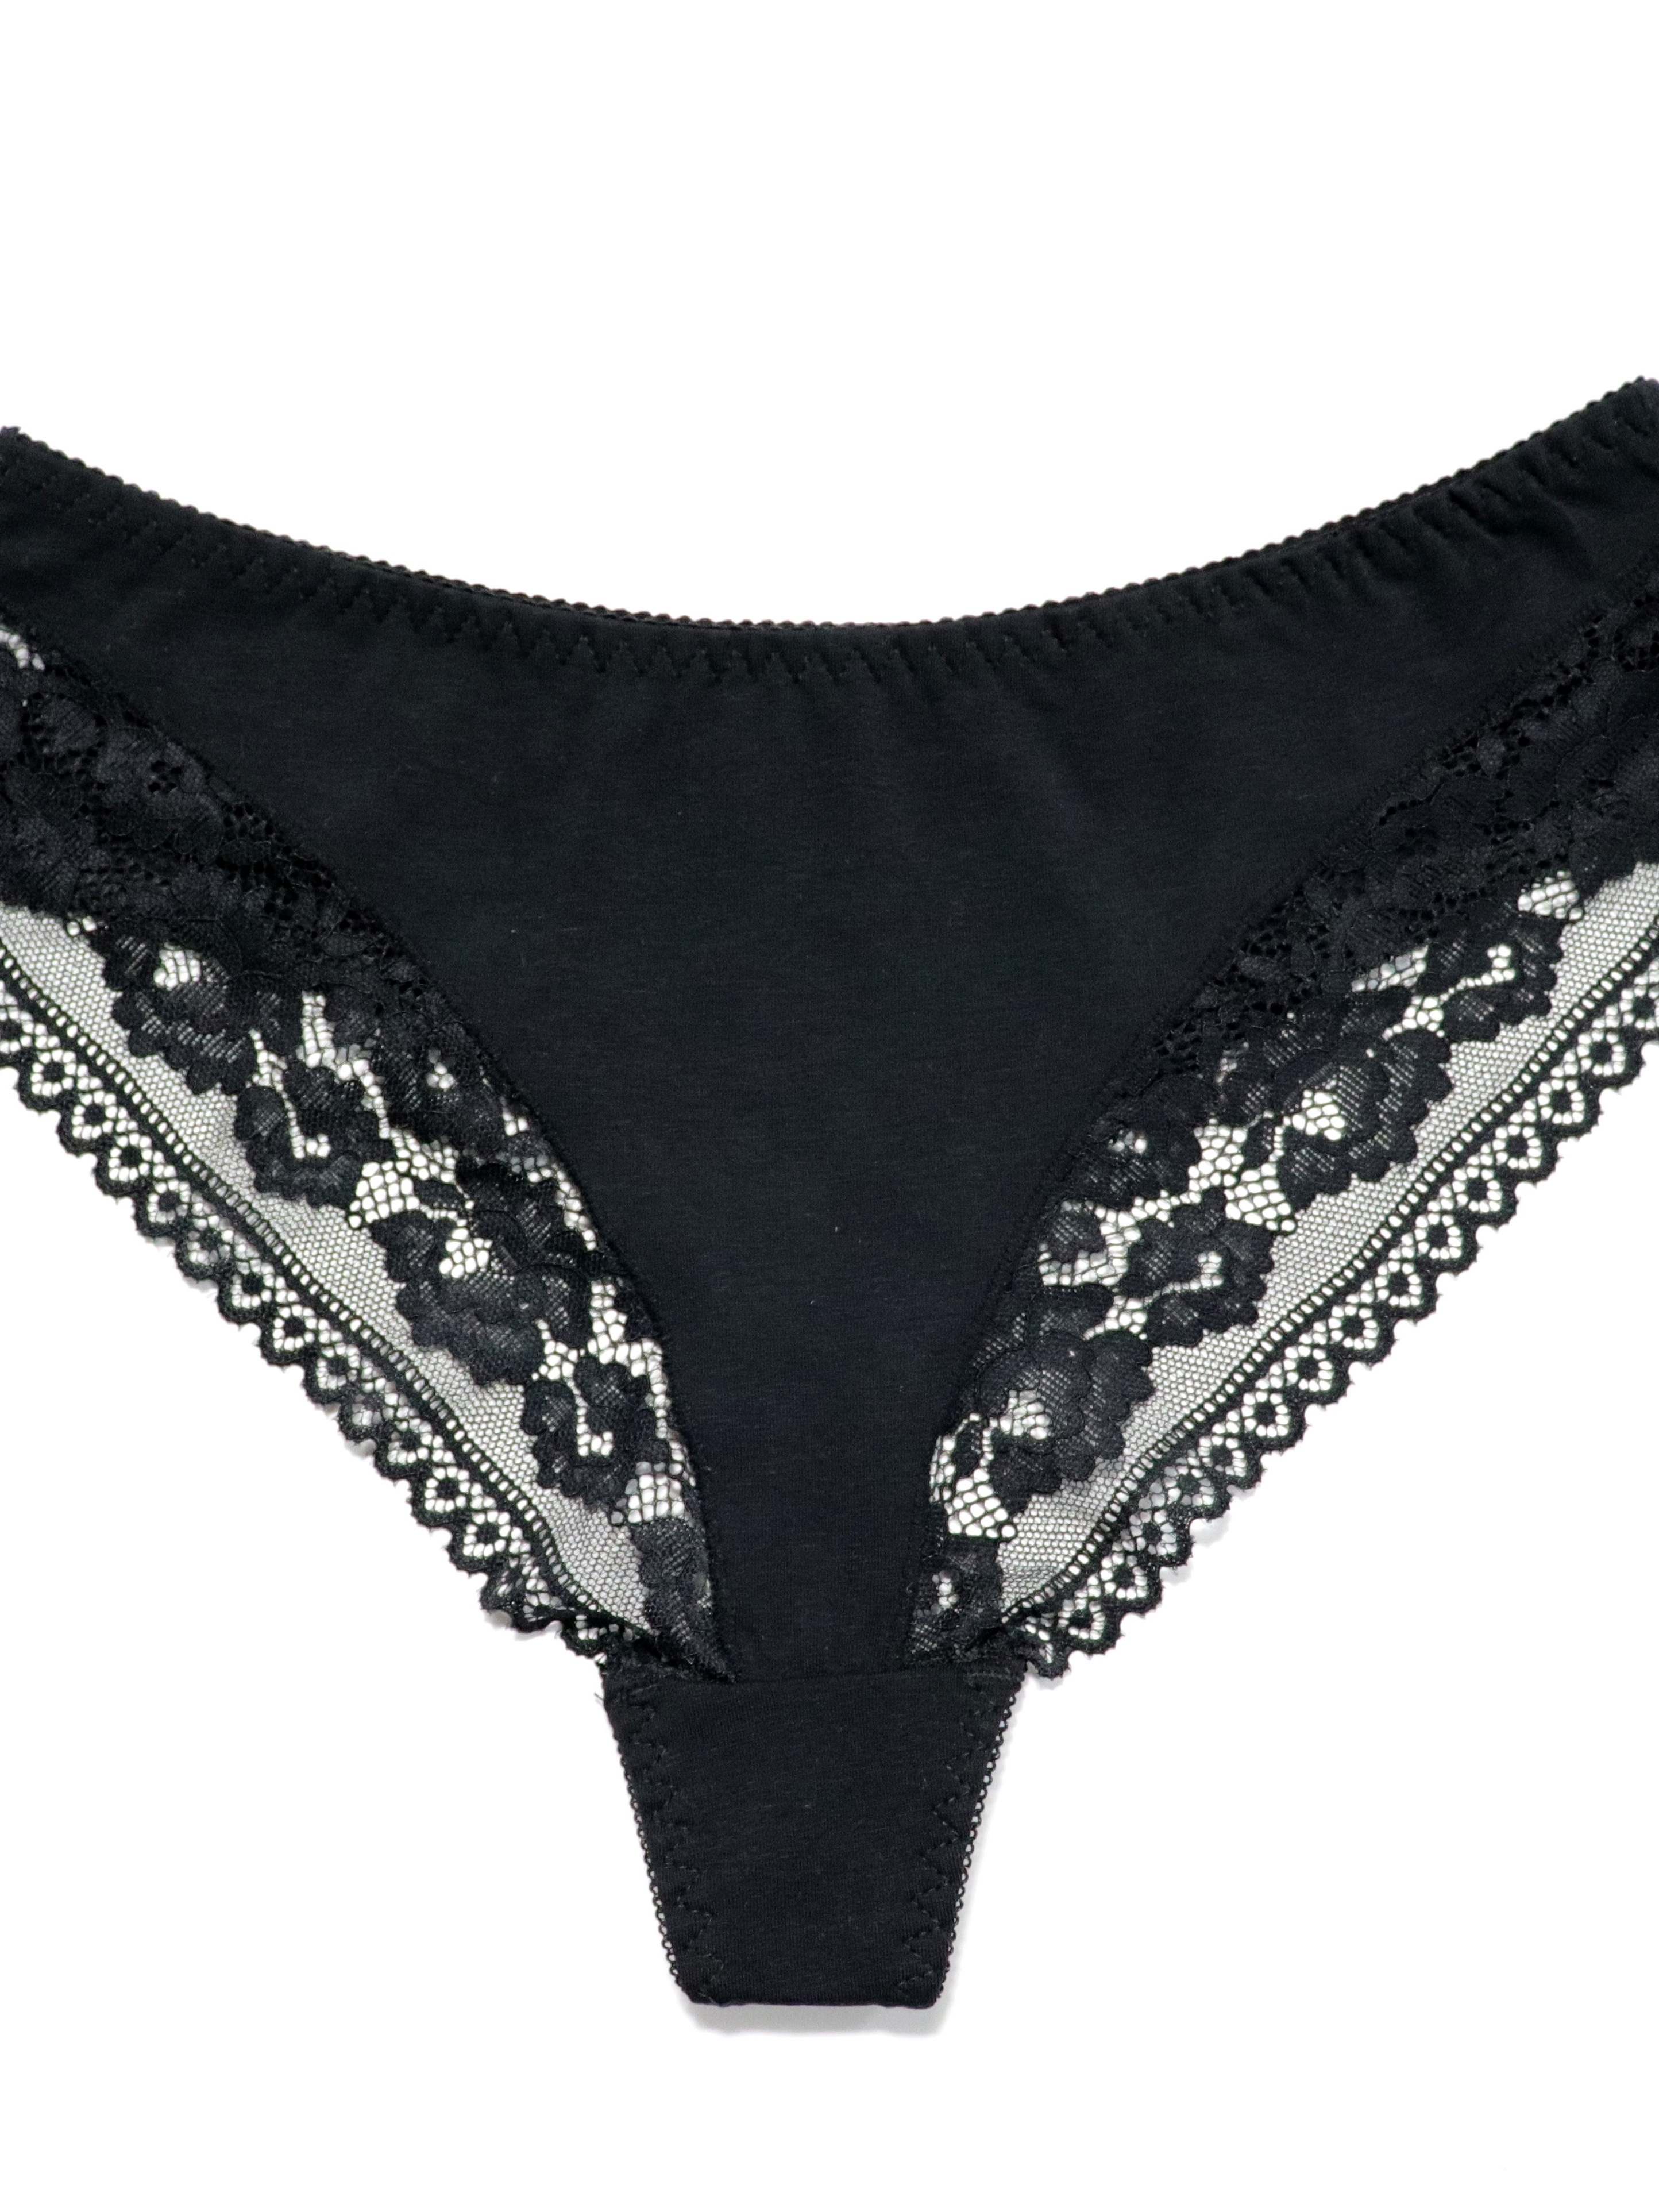 Fashion Embroidery Flowers Lace Lingerie Set Transparent Underwear Women  Plus Size D Cup Sexy Bra Panty Sets Black Bow